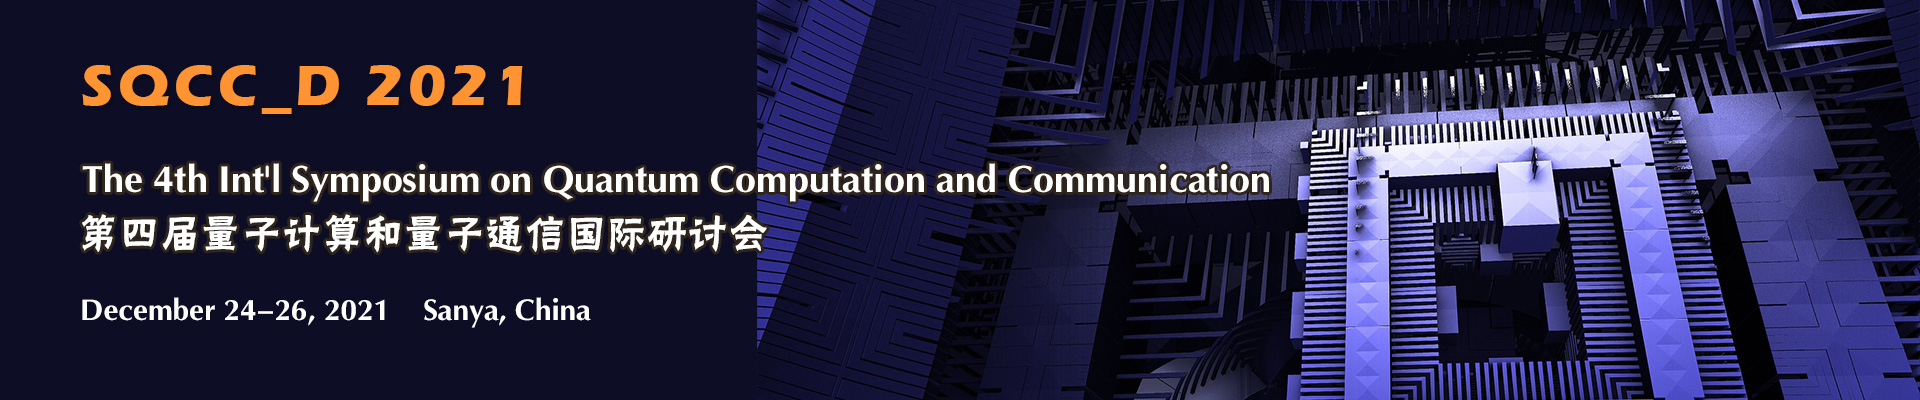 The 4th Int'l Symposium on Quantum Computation and Communication (SQCC_D 2021), Sanya, Hainan, China